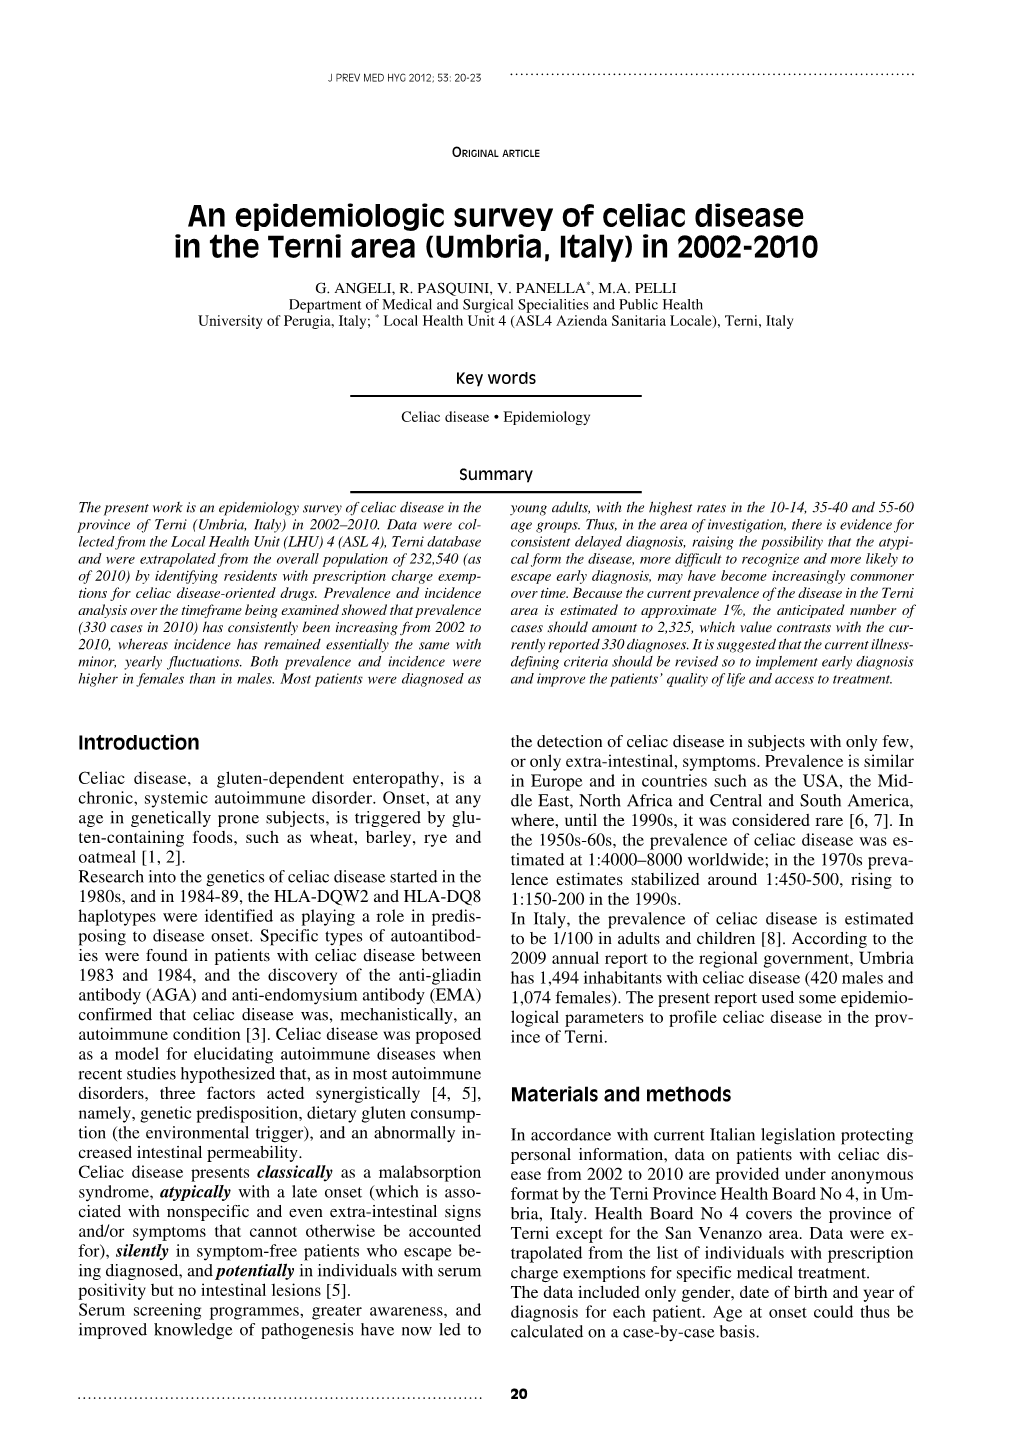 An Epidemiologic Survey of Celiac Disease in the Terni Area (Umbria, Italy) in 2002-2010